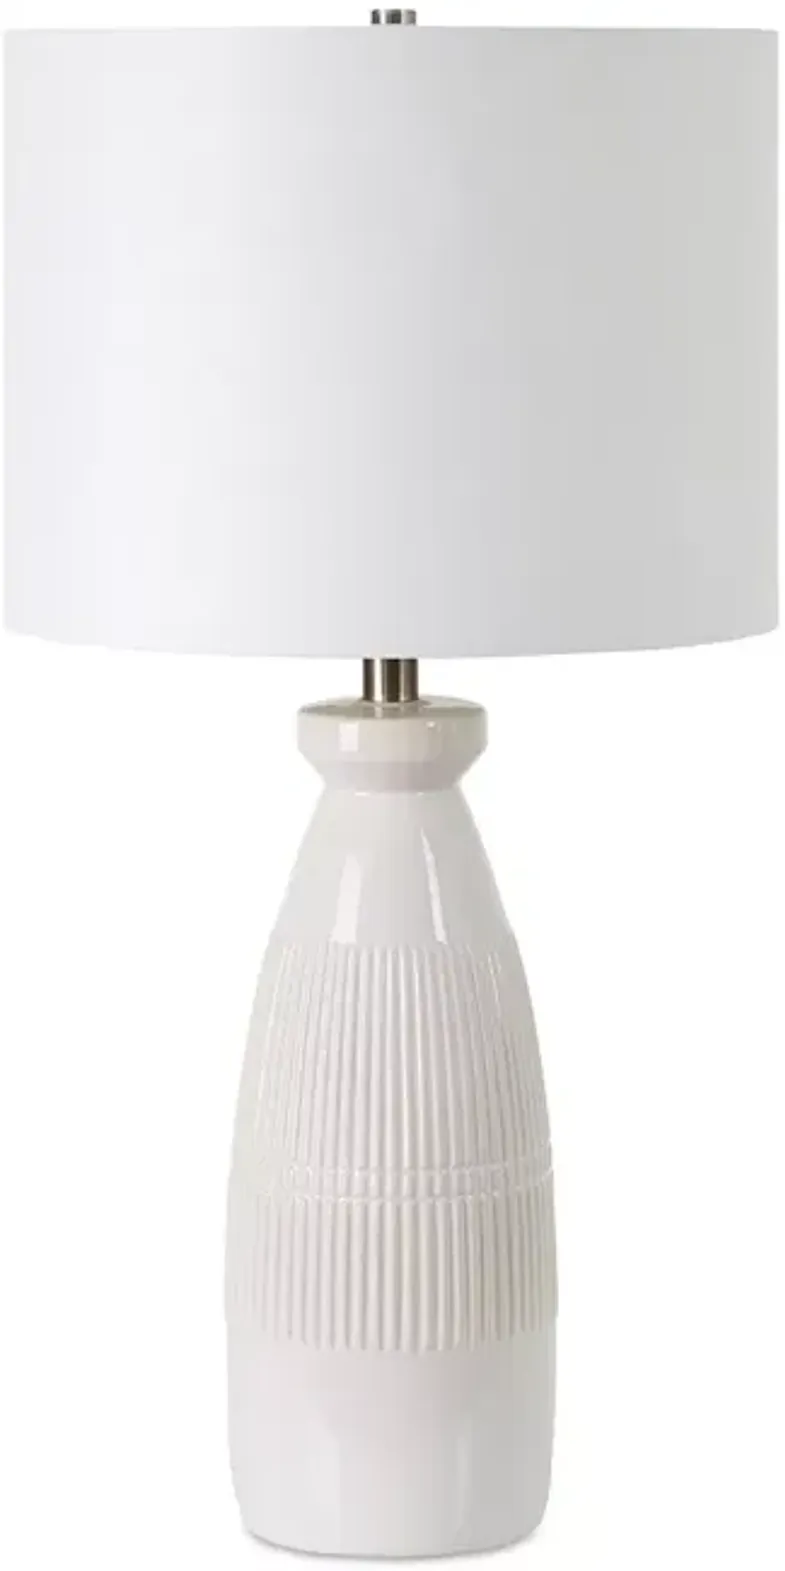 Ren-Wil Nado Table Lamp